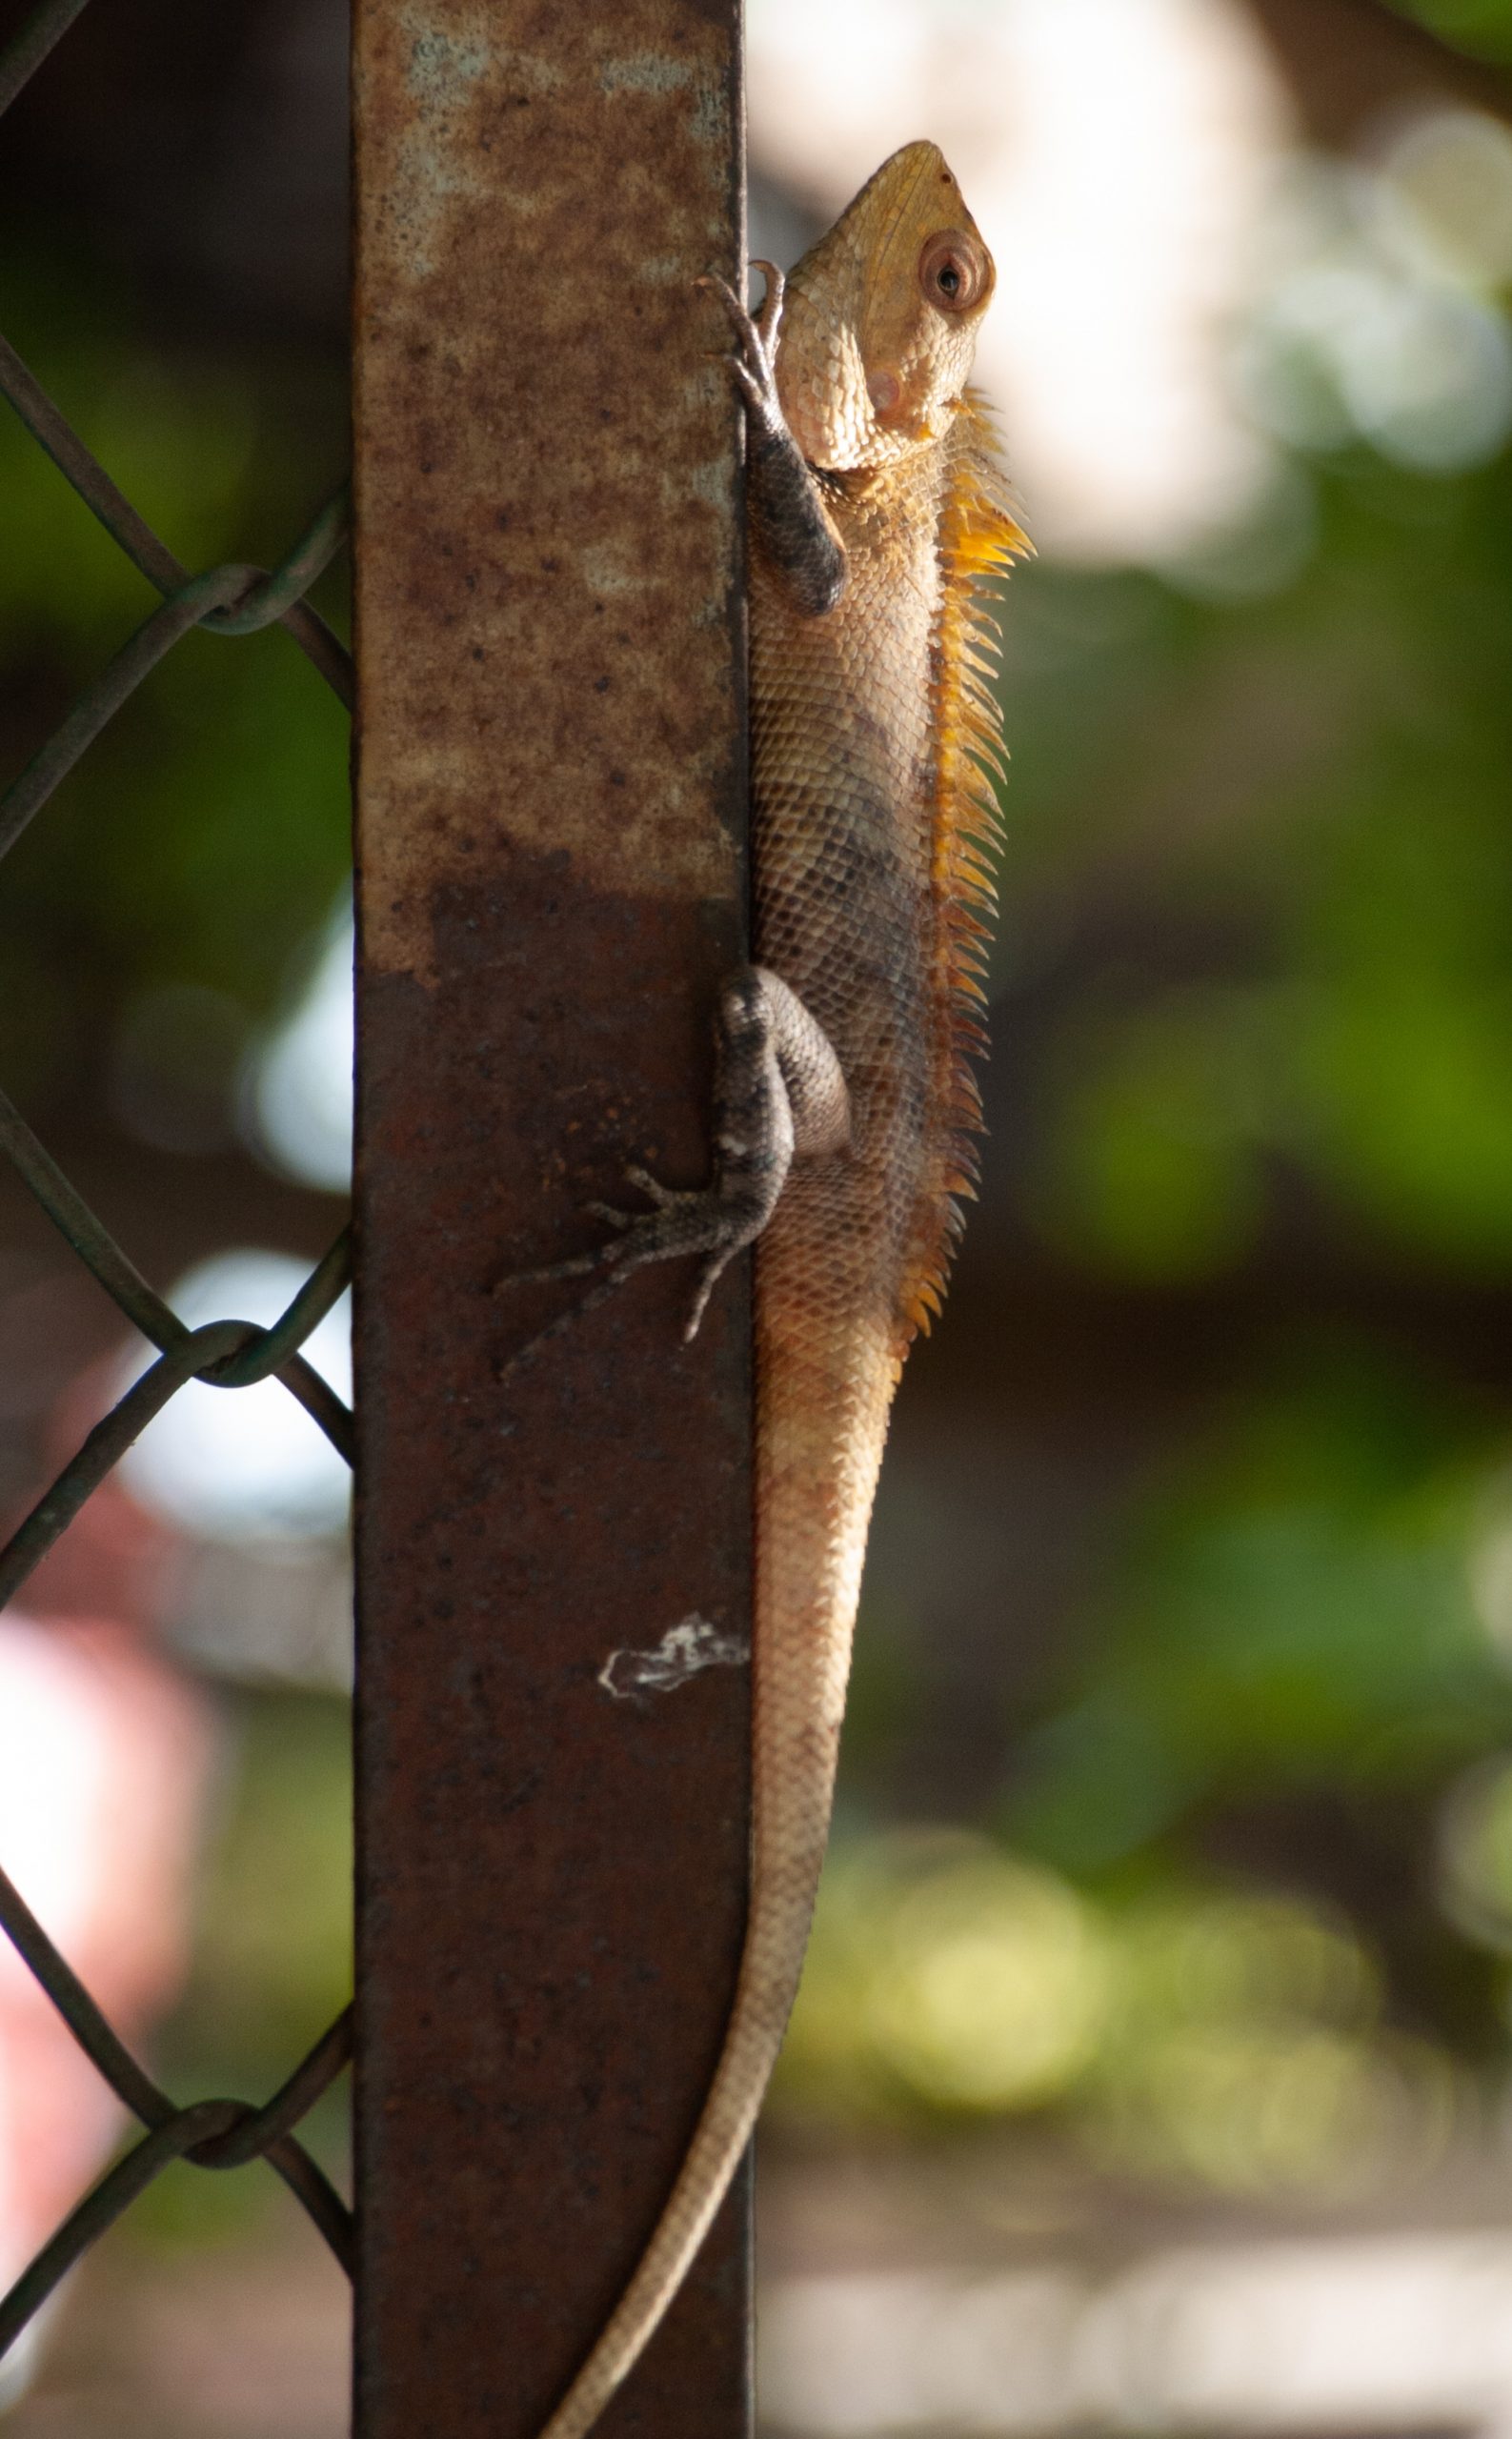 Lizard on the gate